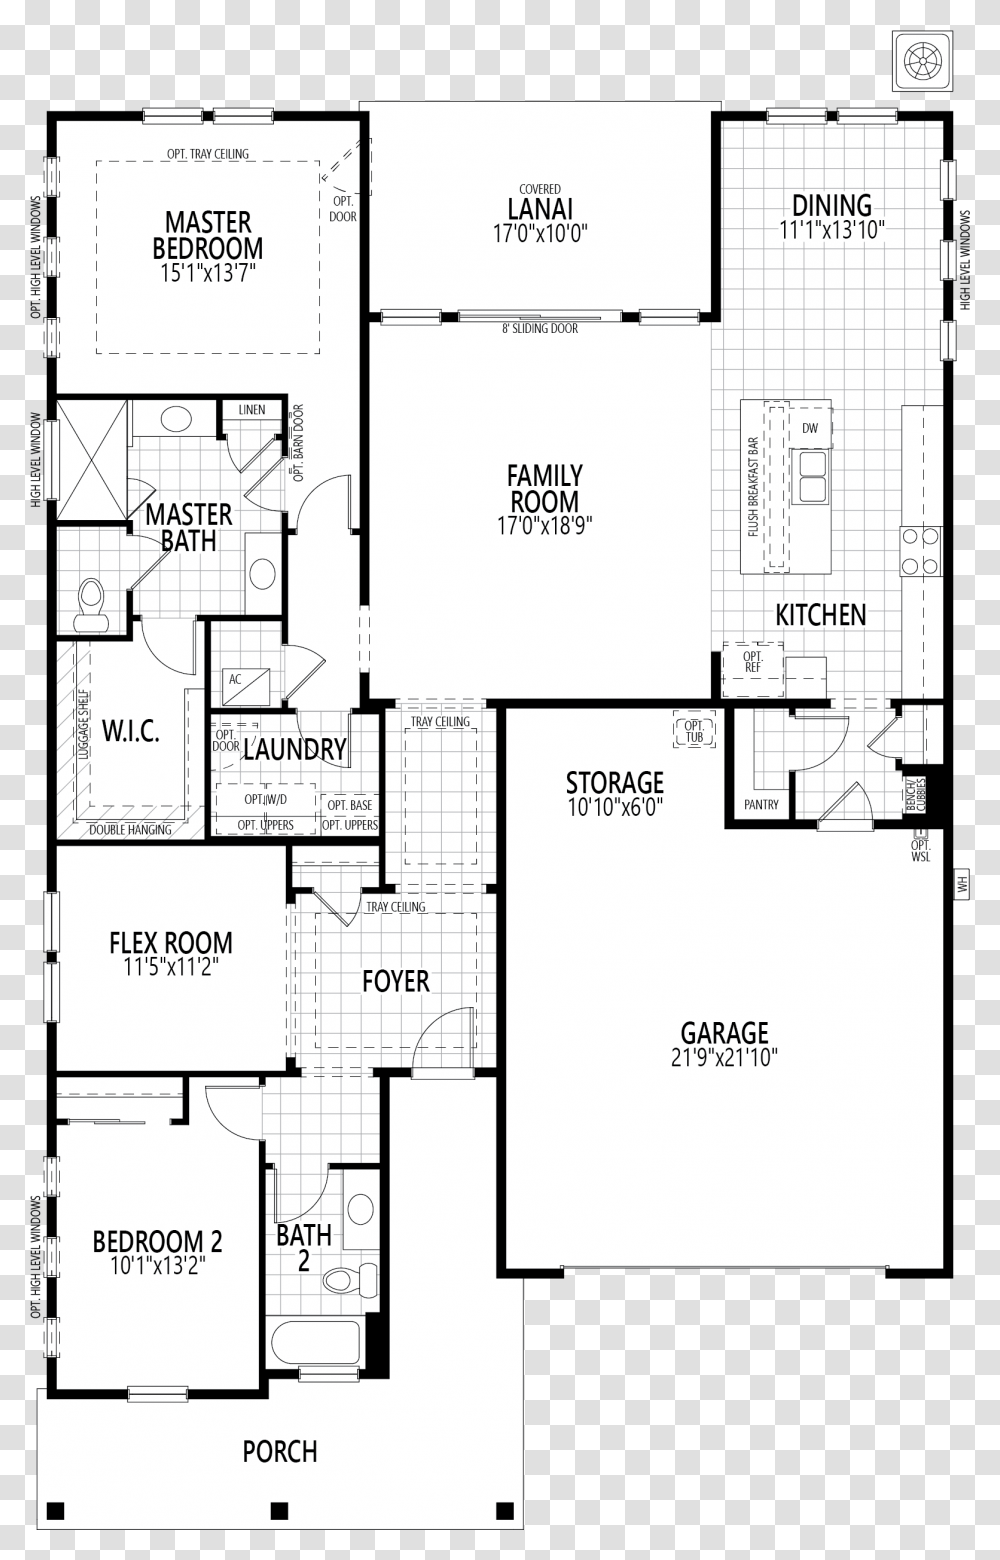 Mattamy Homes In Saint Johns Fl Floor Plan, Diagram, Plot, Flyer, Poster Transparent Png